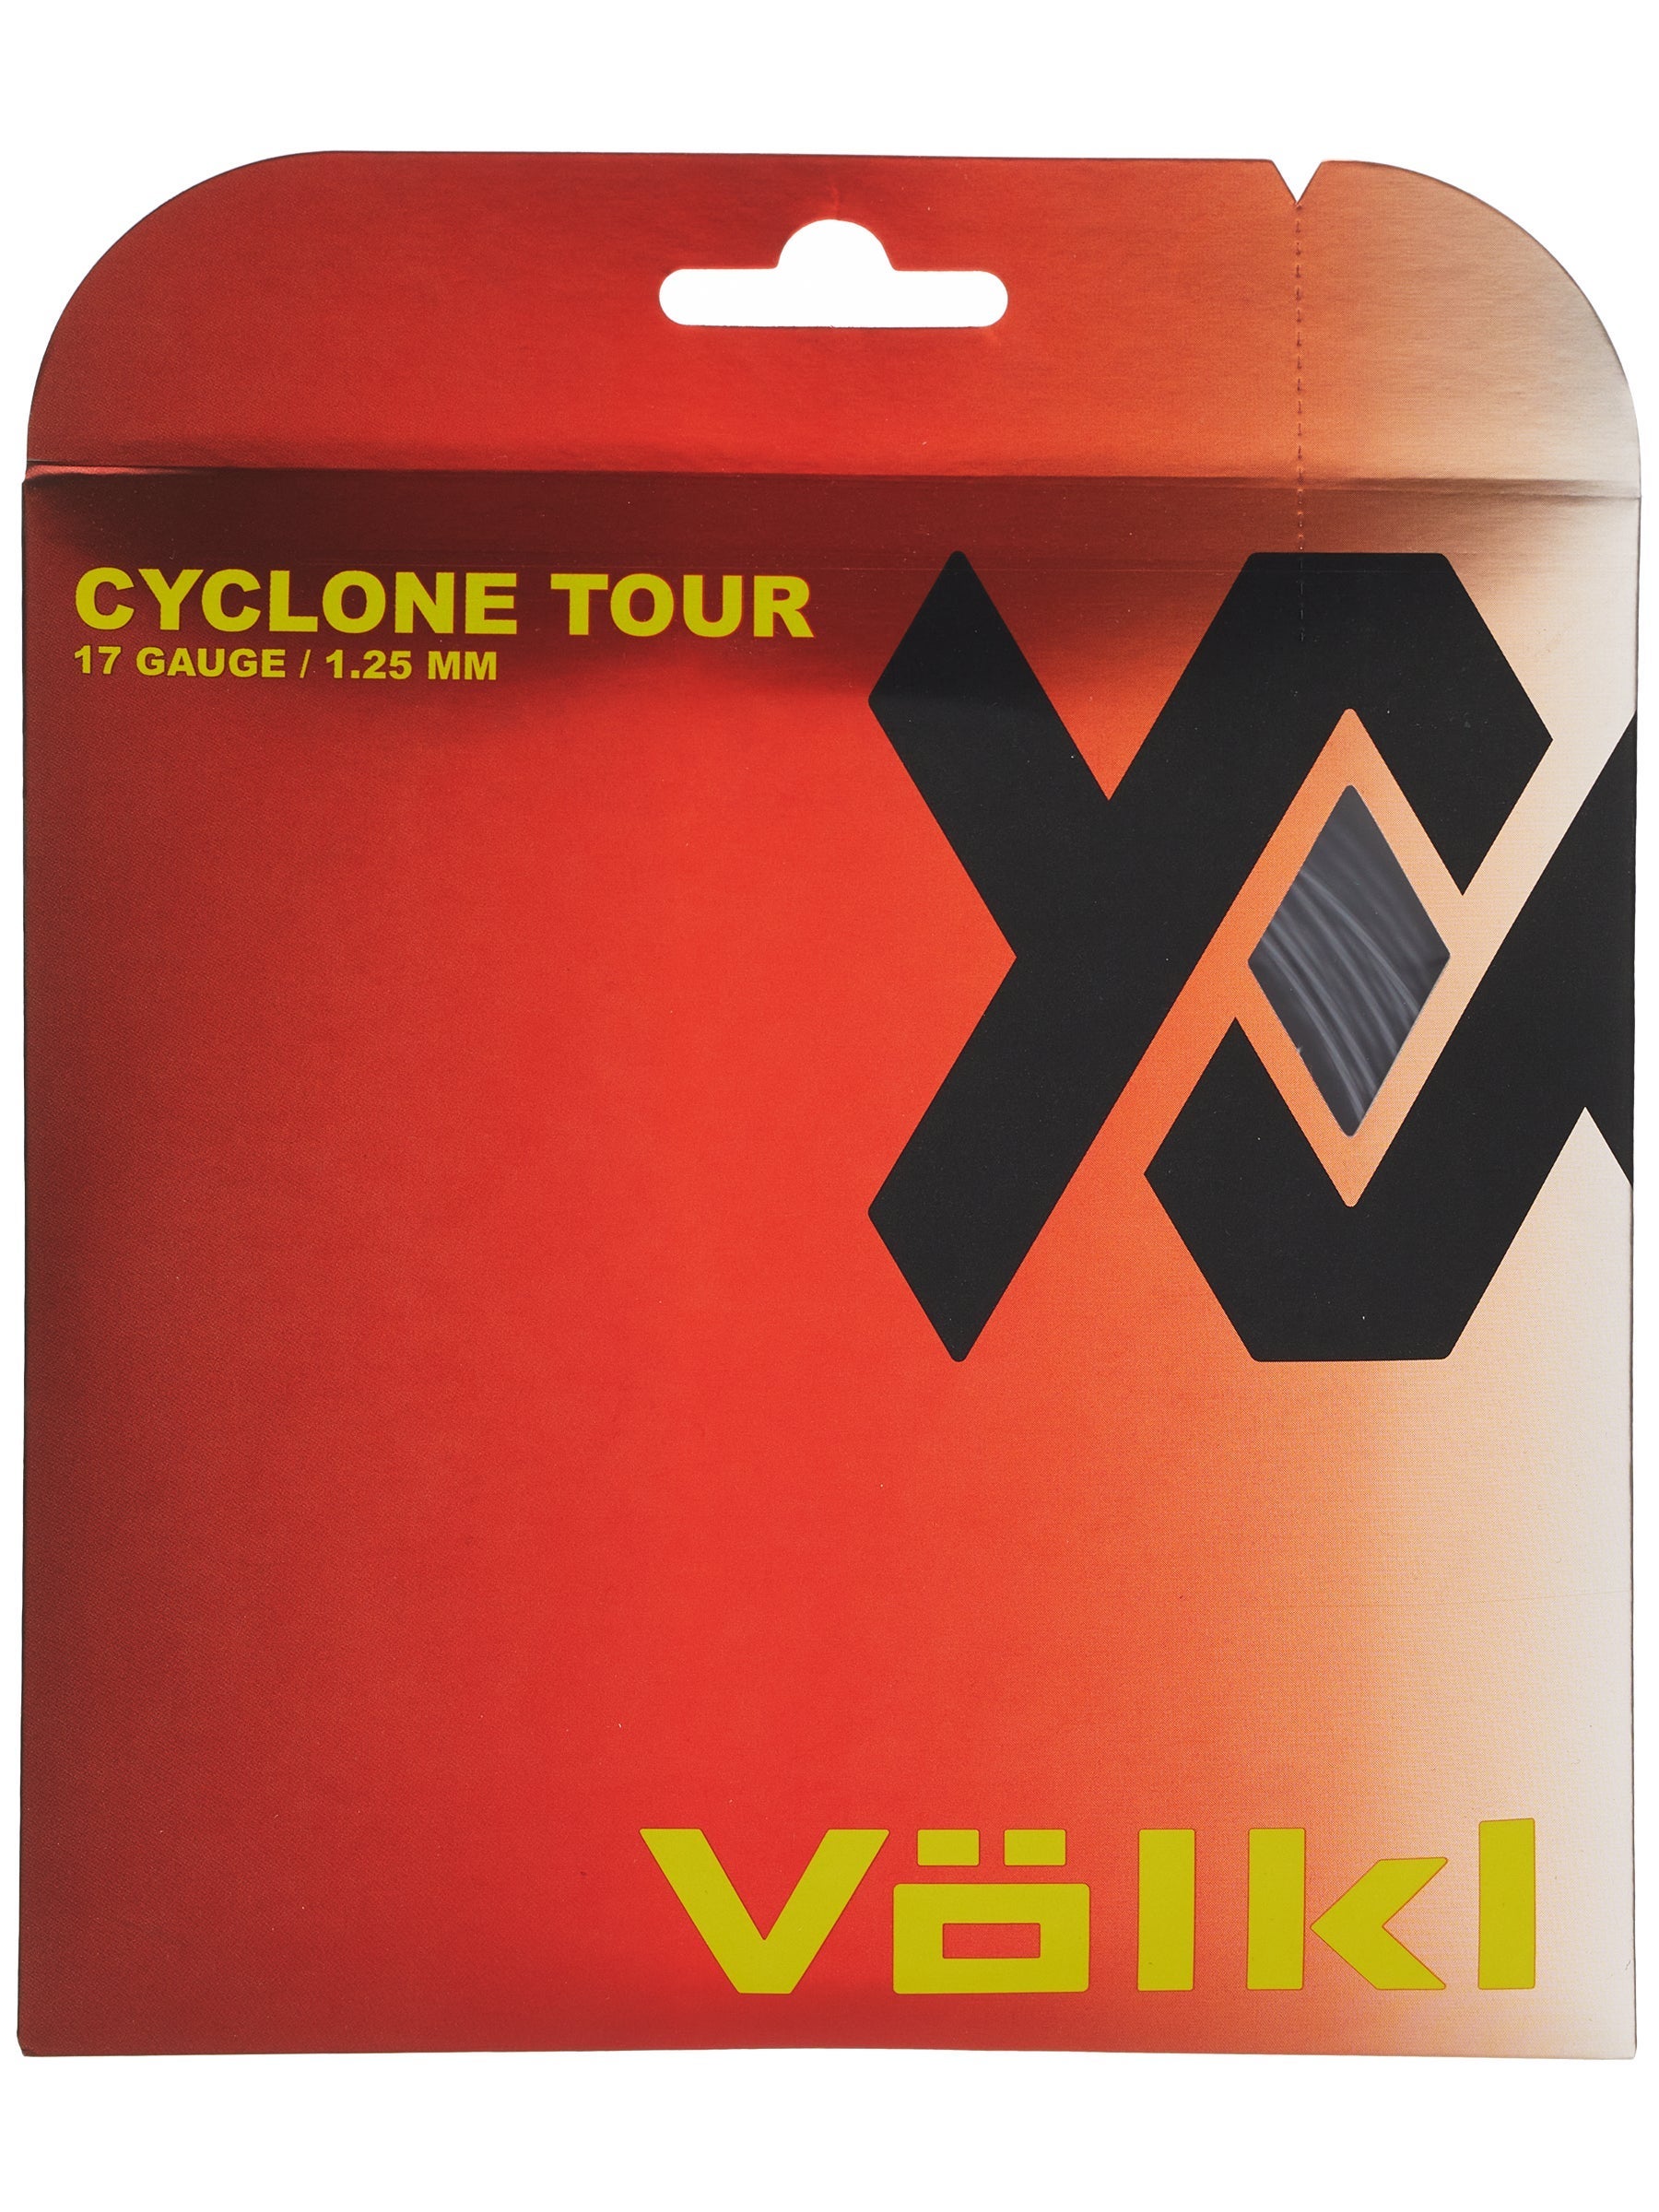 VOLKL CYCLONE TOUR TENNIS STRING 1.25MM 17G RRP £15 RED ONE 12M SET 